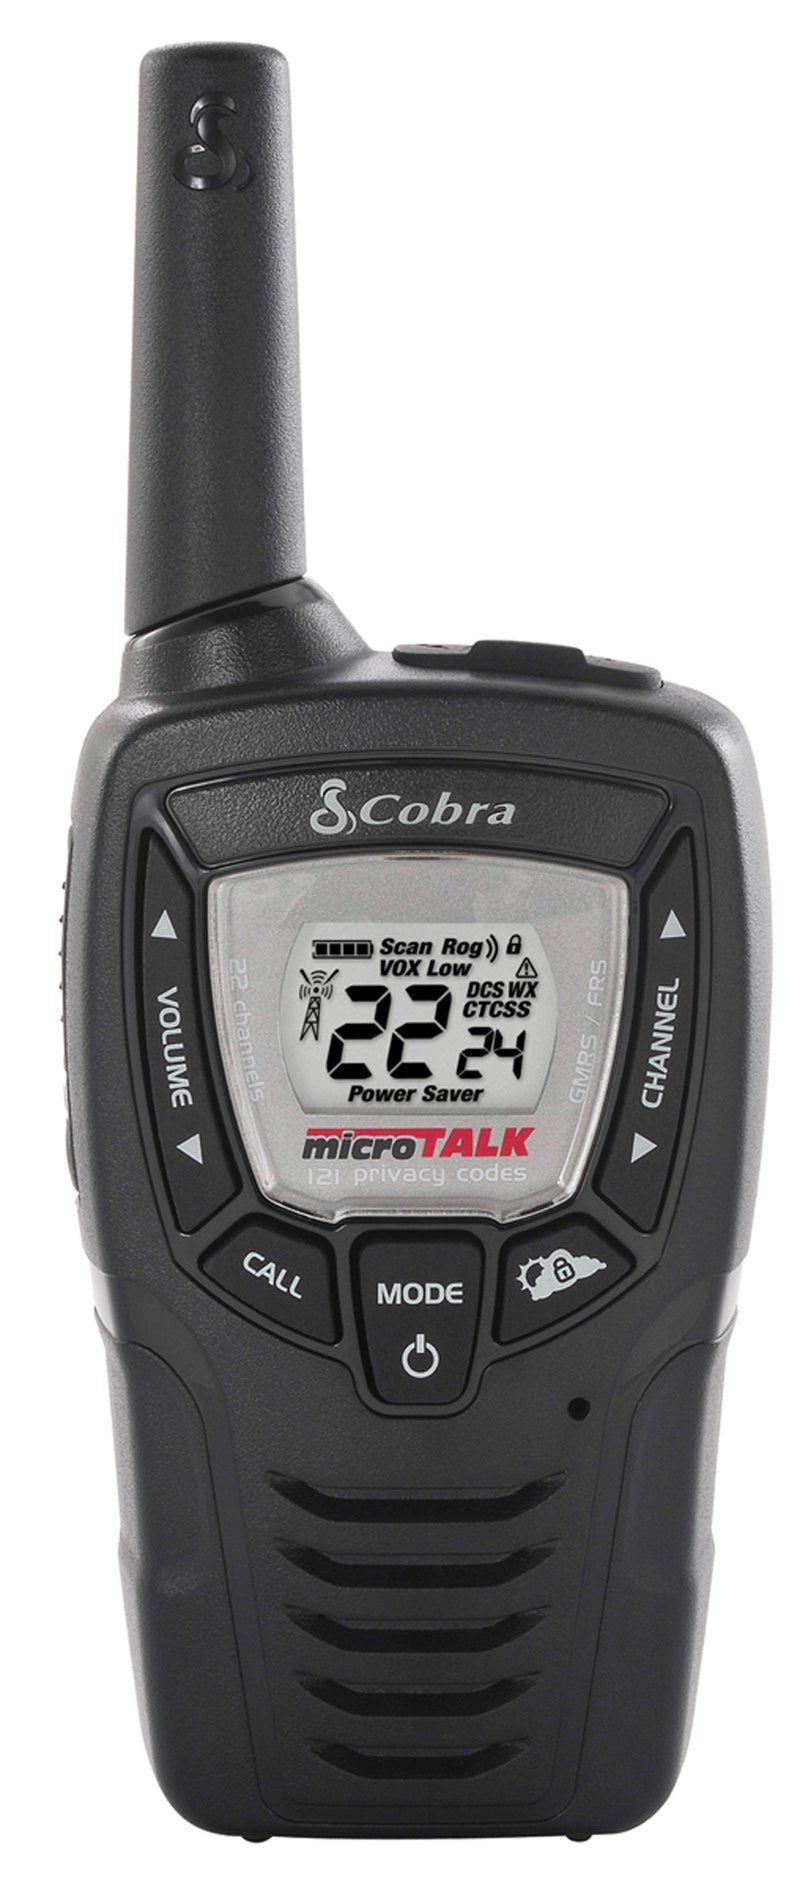 (4) COBRA ACXT390 MicroTalk 23 Mile 22 Ch Walkie Talkie 2-Way Radios w/ Headsets